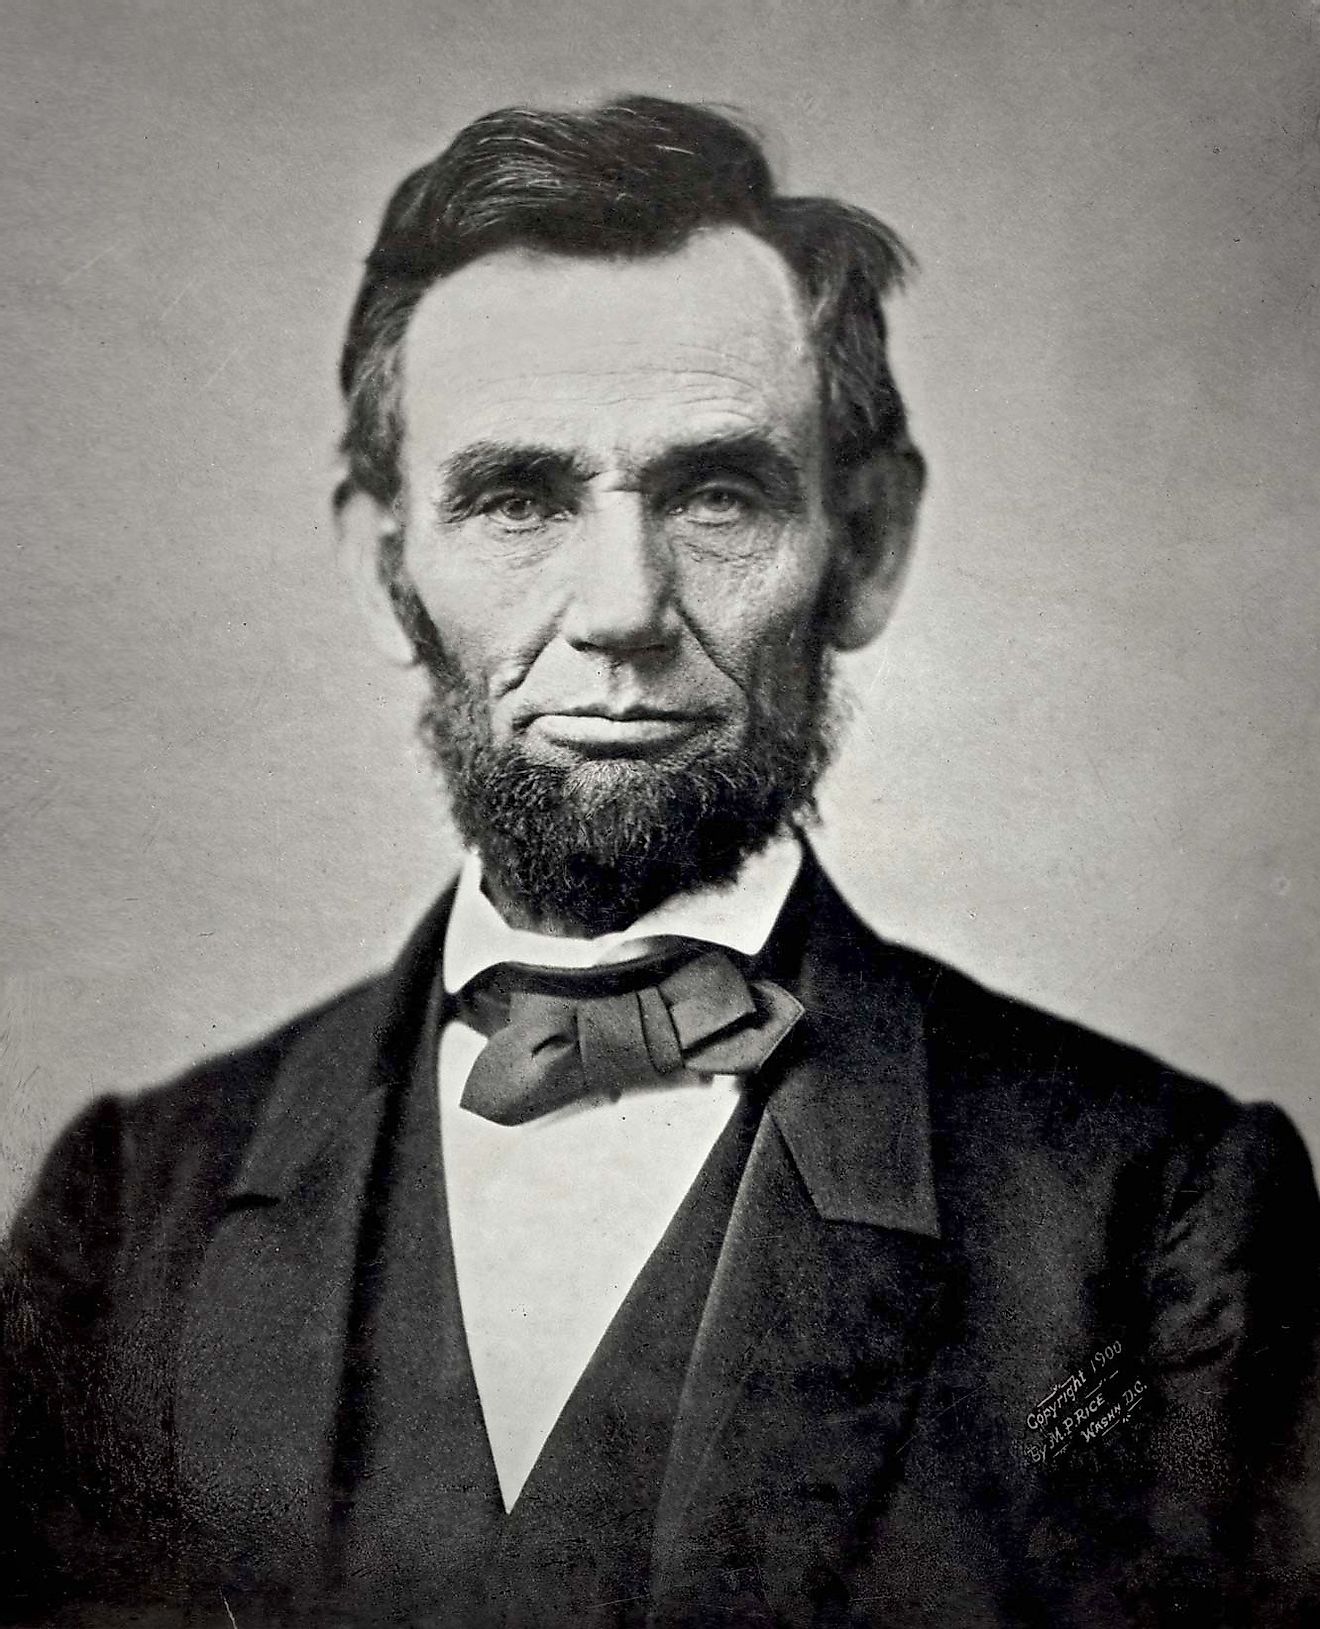 Abraham Lincoln. Image credit: Alexander Gardner/Public domain